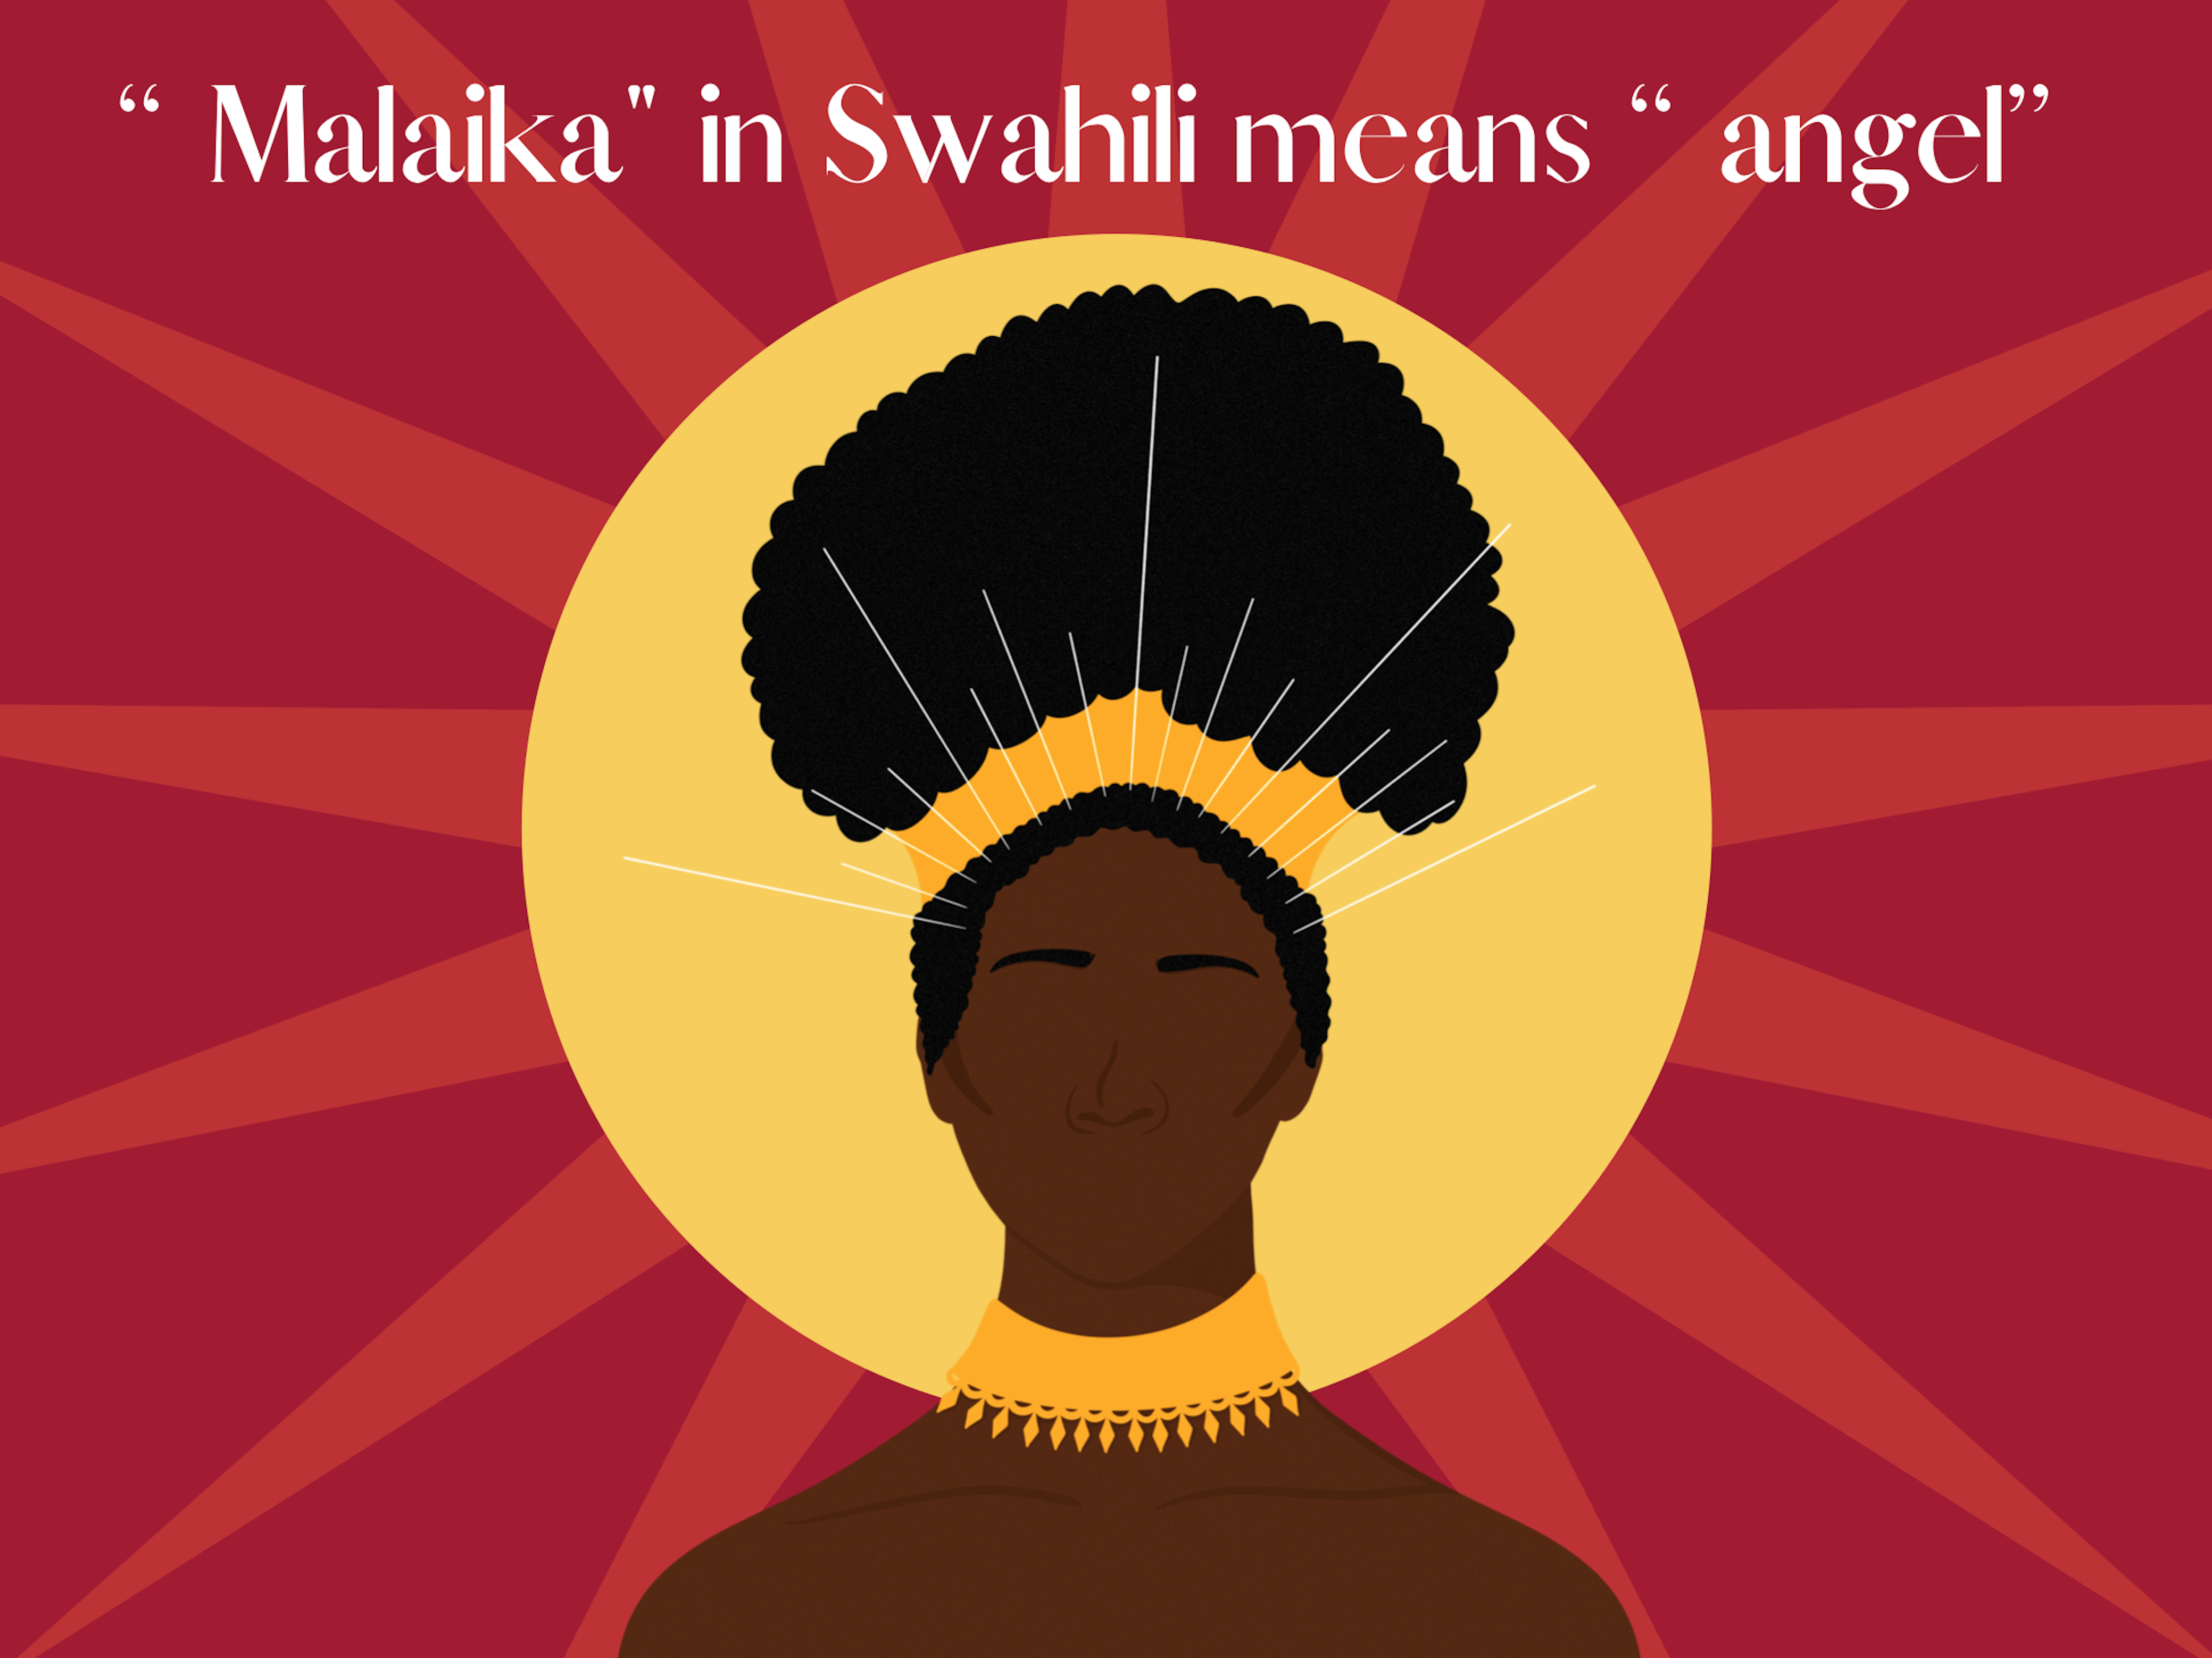 Malaika means Angel in Swahili